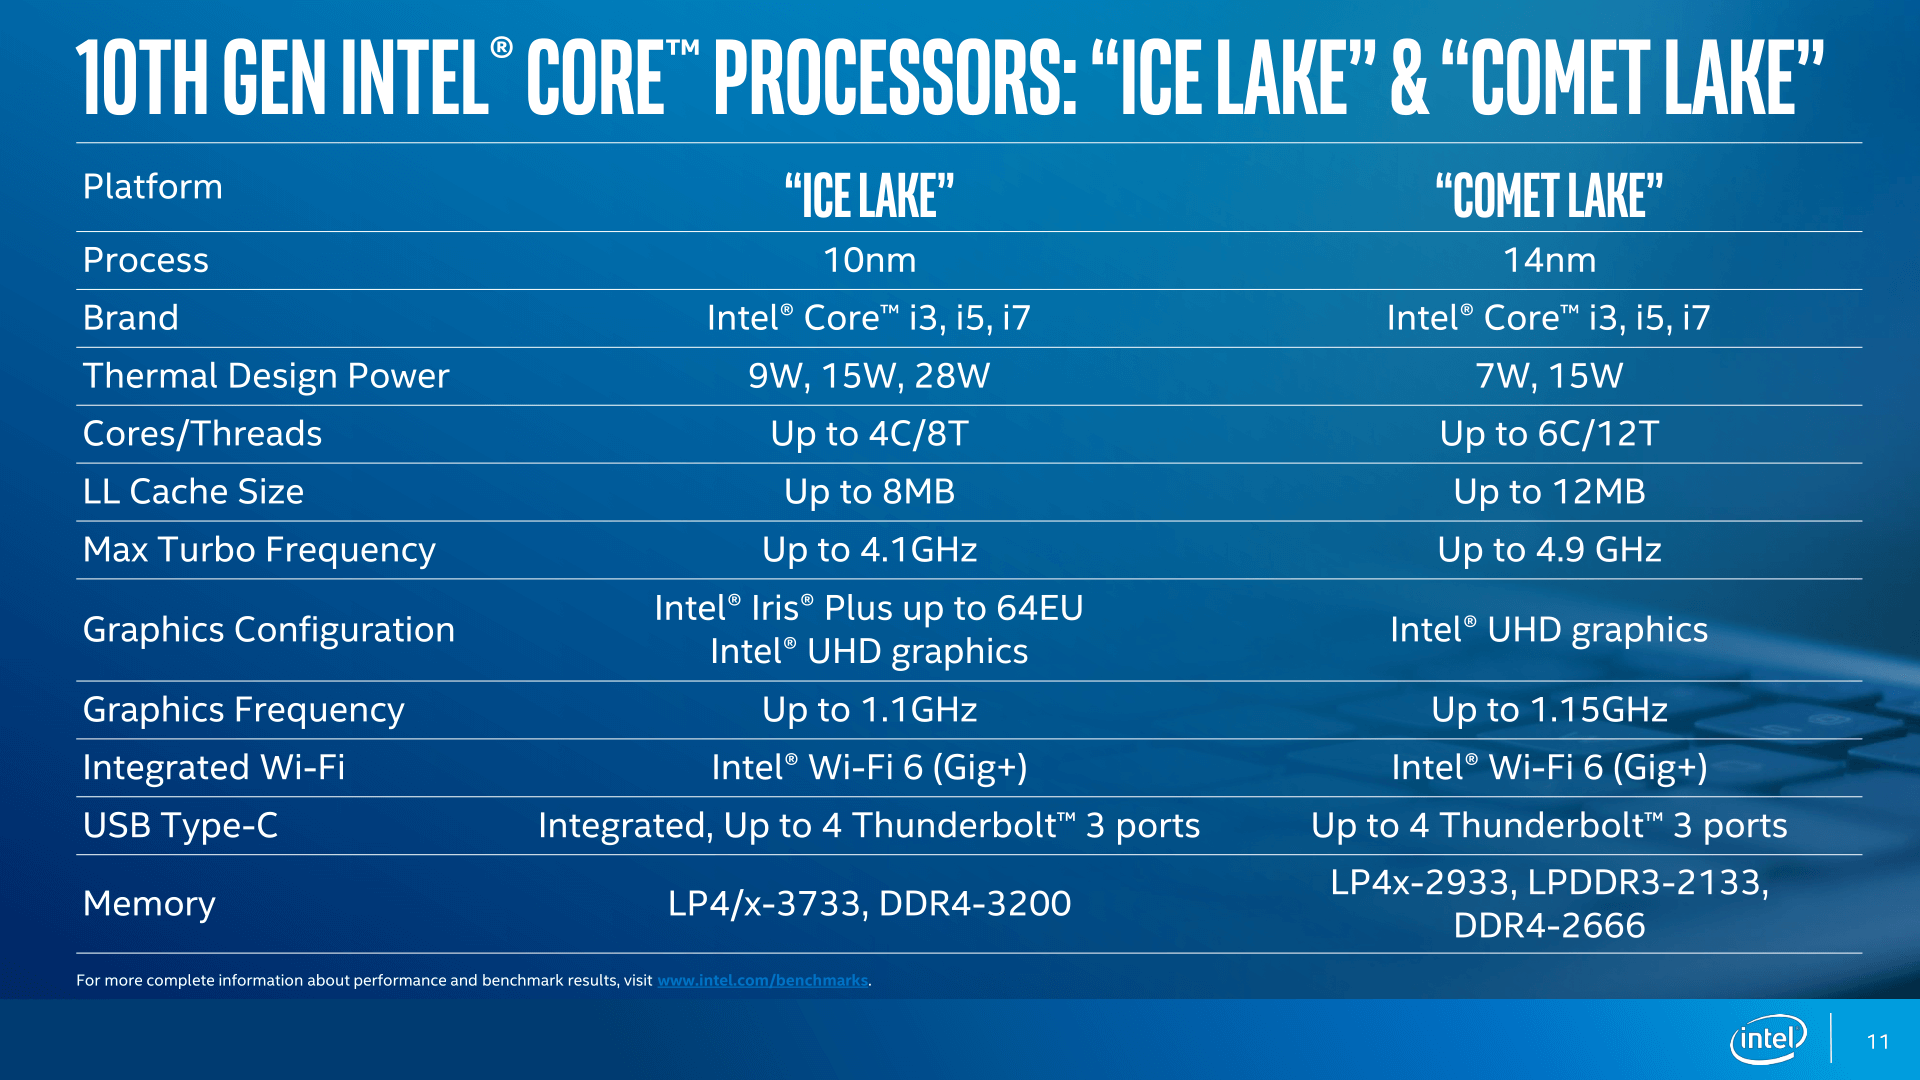 Kudde Verduisteren satelliet Intel Core i7-10710U Benchmarked: 14nm+++ Comet Lake | TechSpot